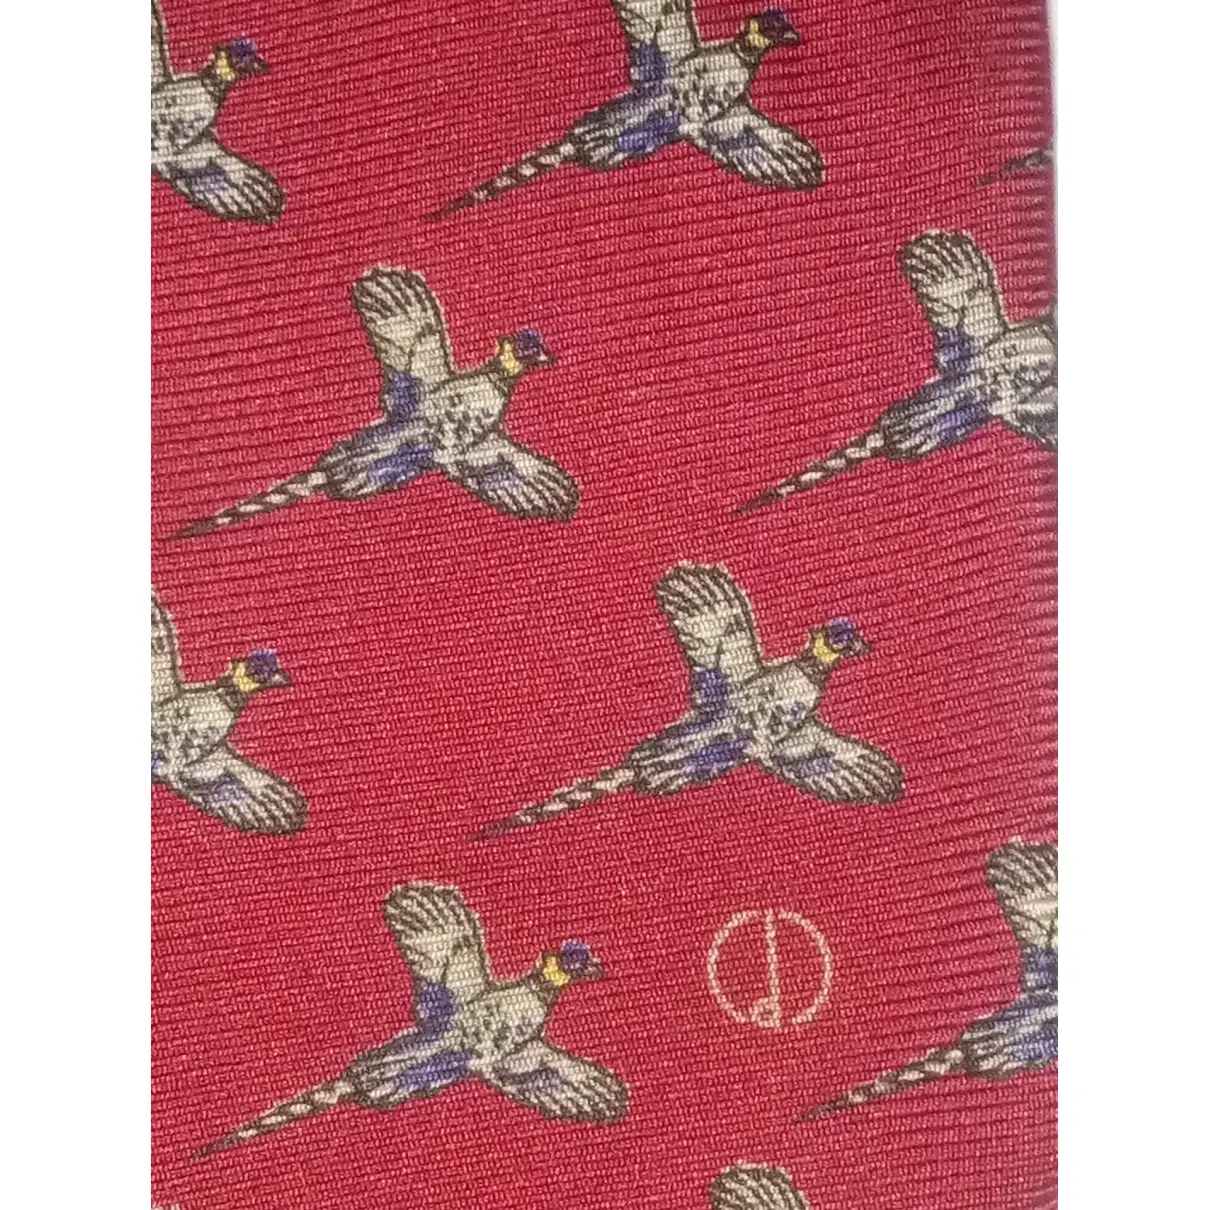 Buy Alfred Dunhill Silk tie online